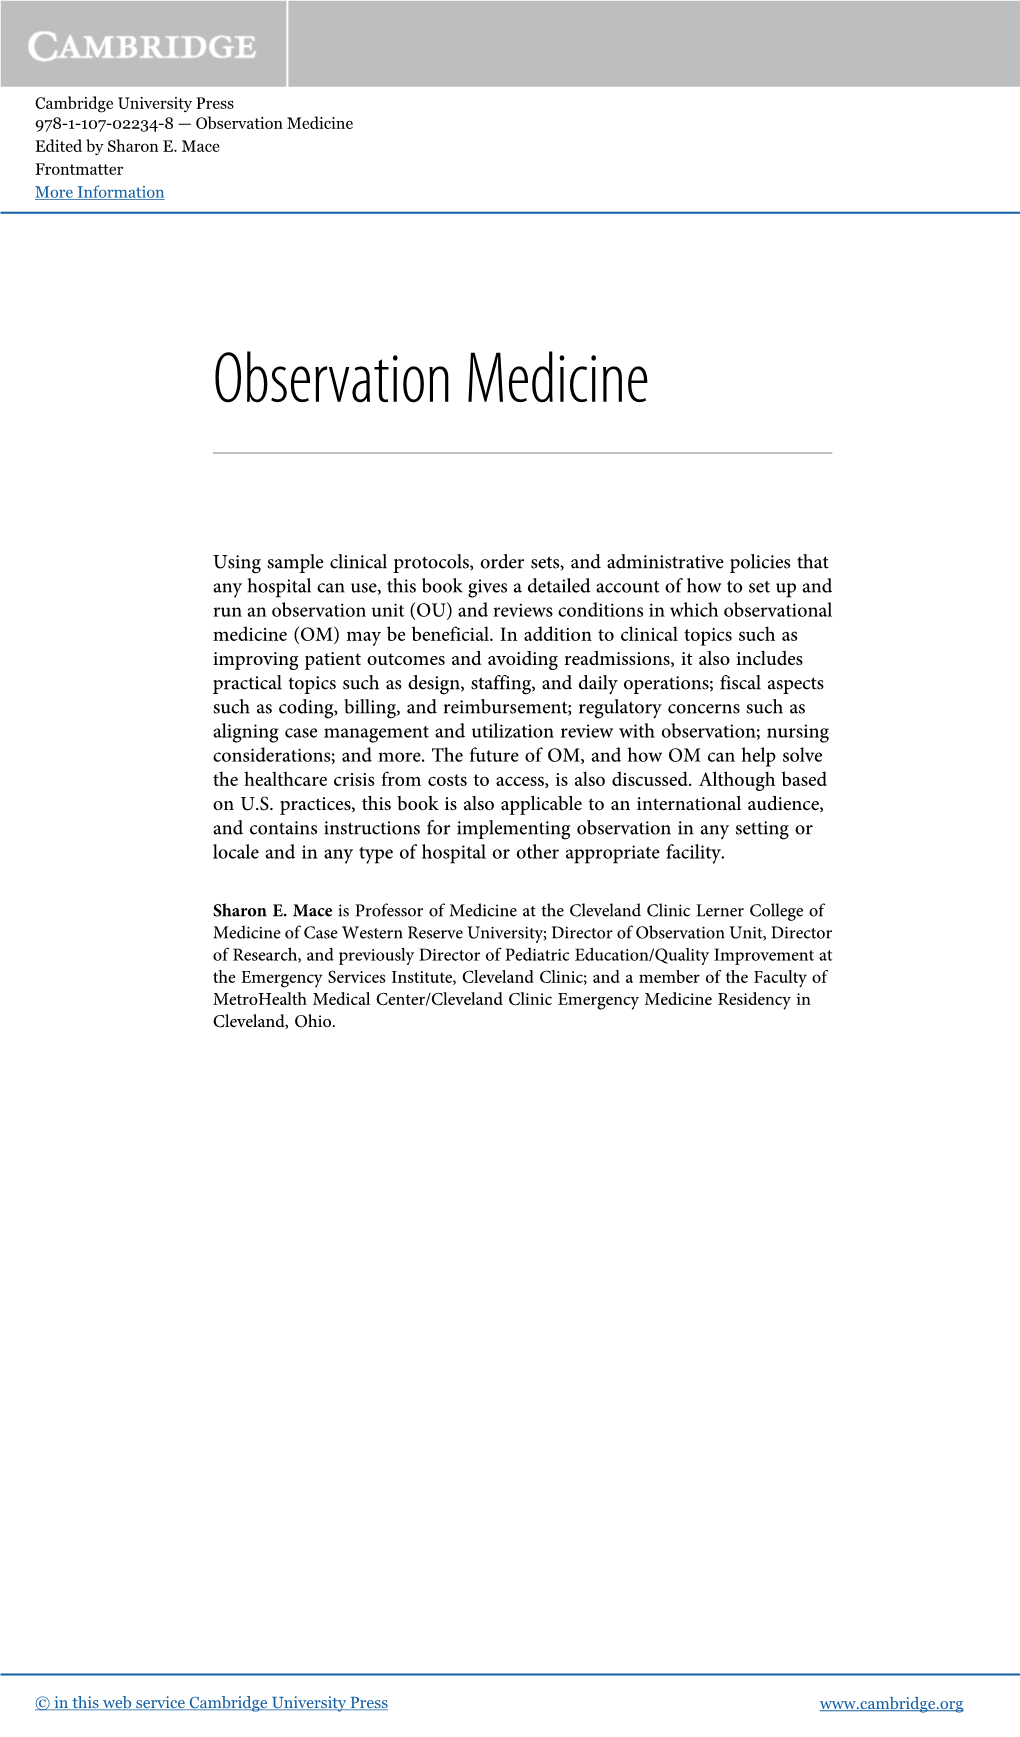 Observation Medicine Edited by Sharon E